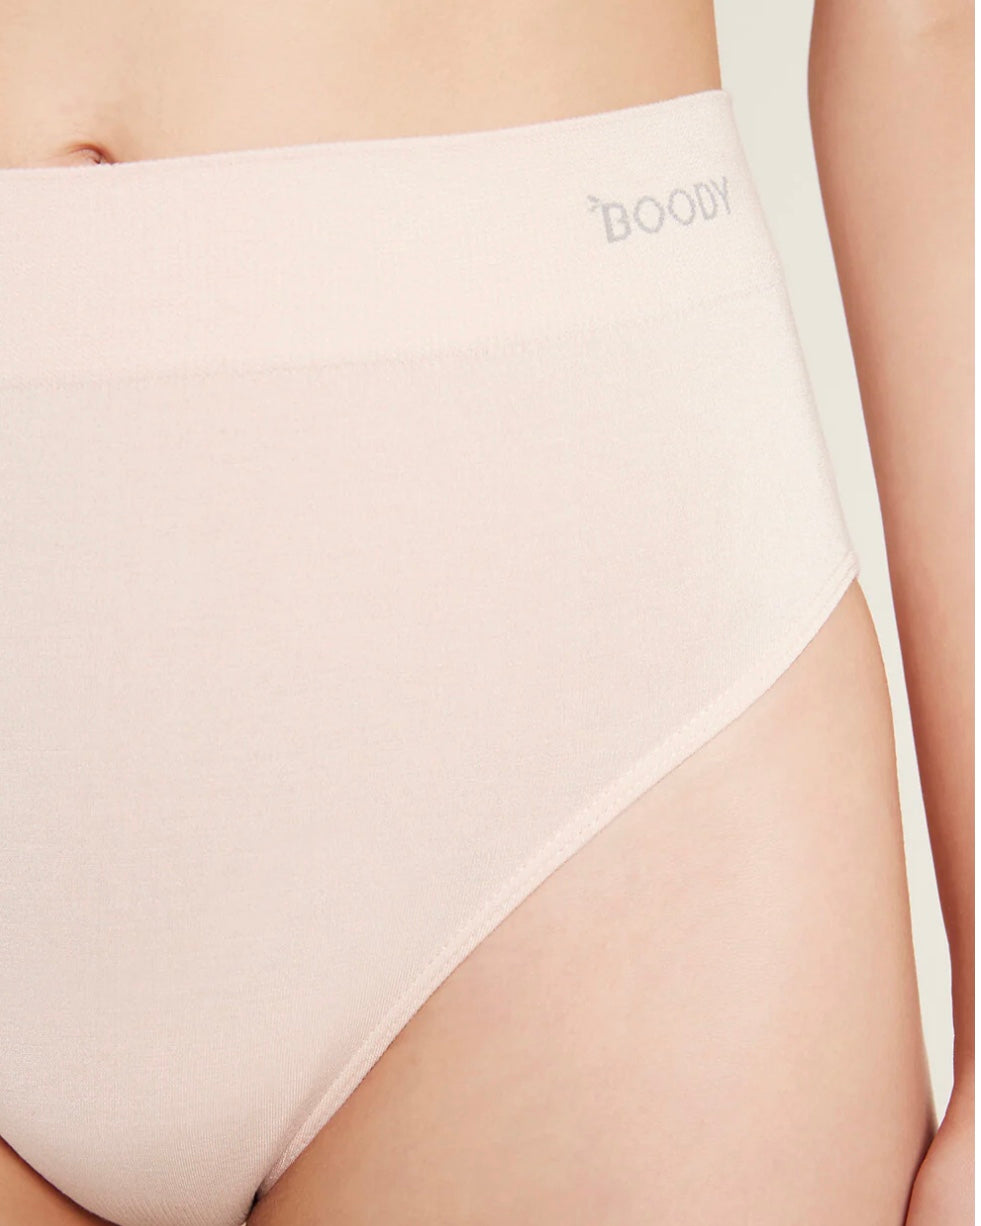 Boody Bamboo Underwear - Full Brief